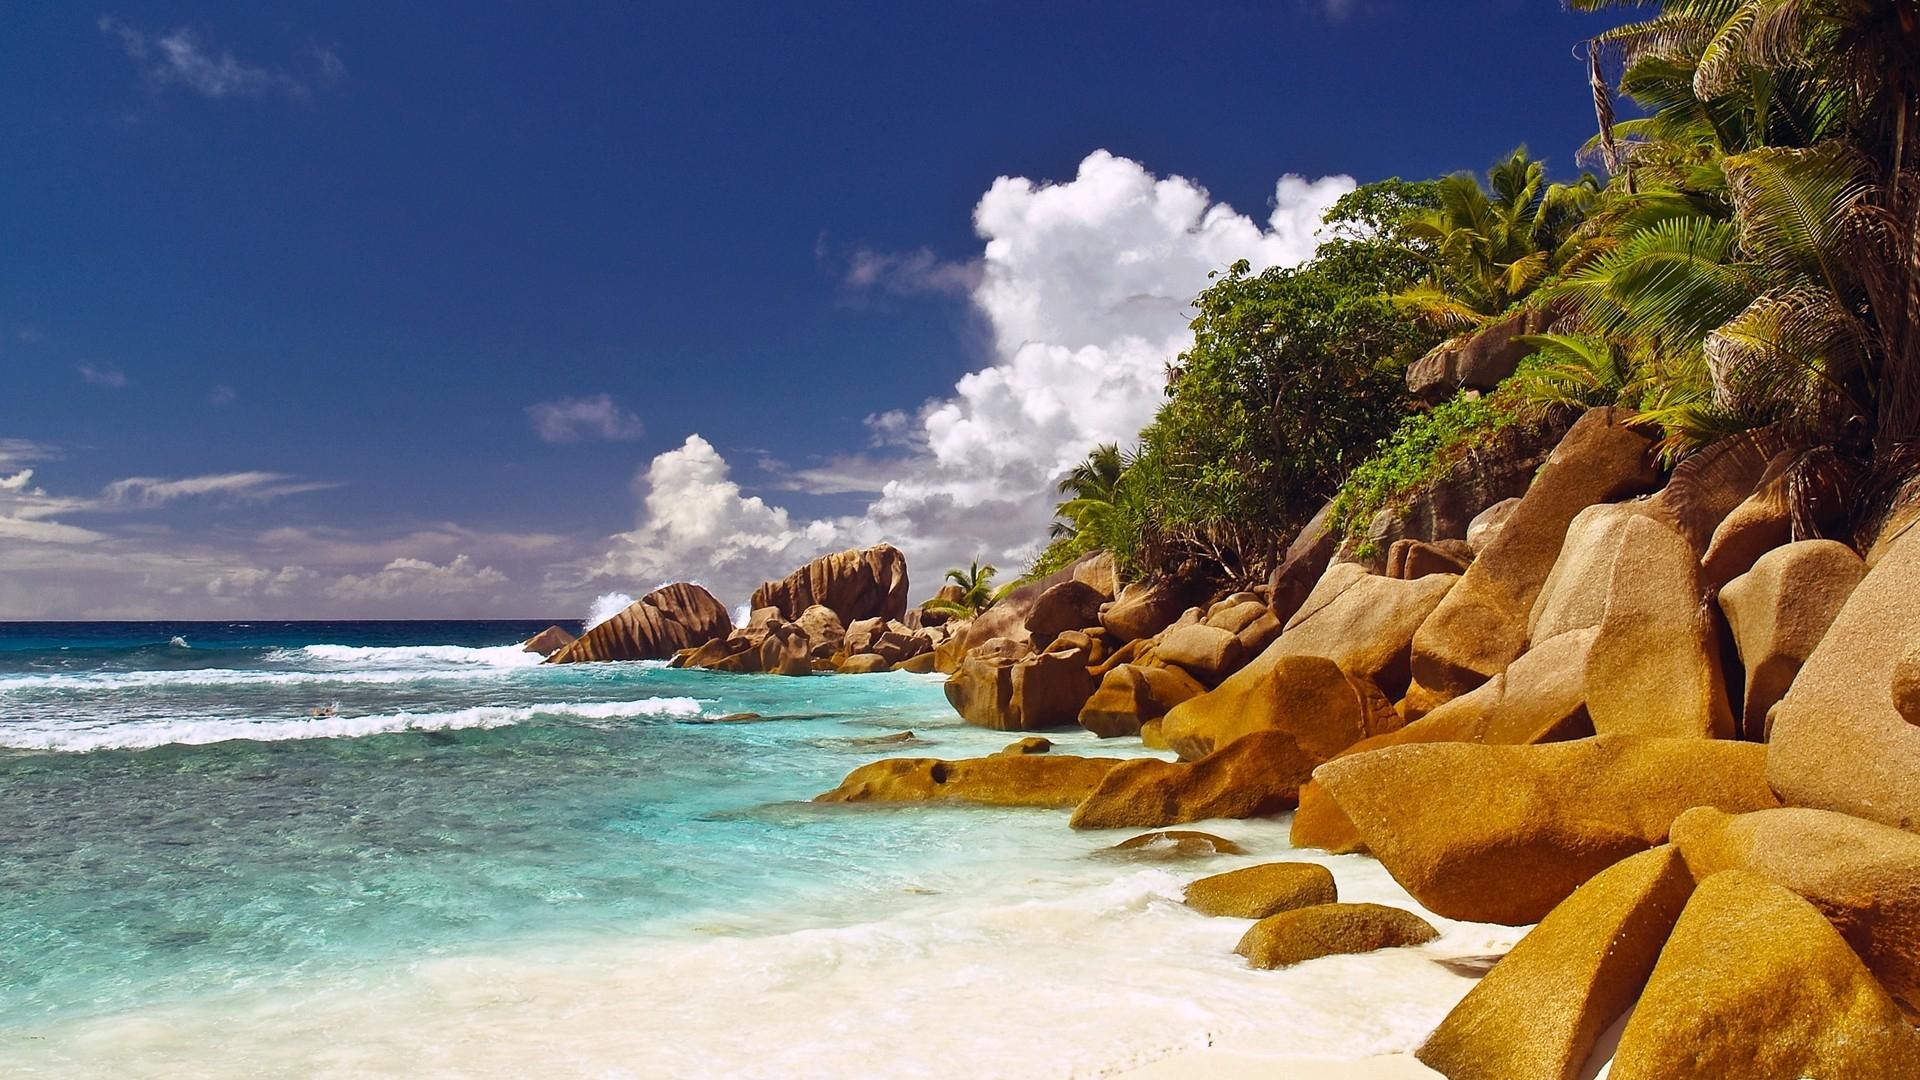 Seychelles Beach Wallpapers - Top Free Seychelles Beach Backgrounds ...